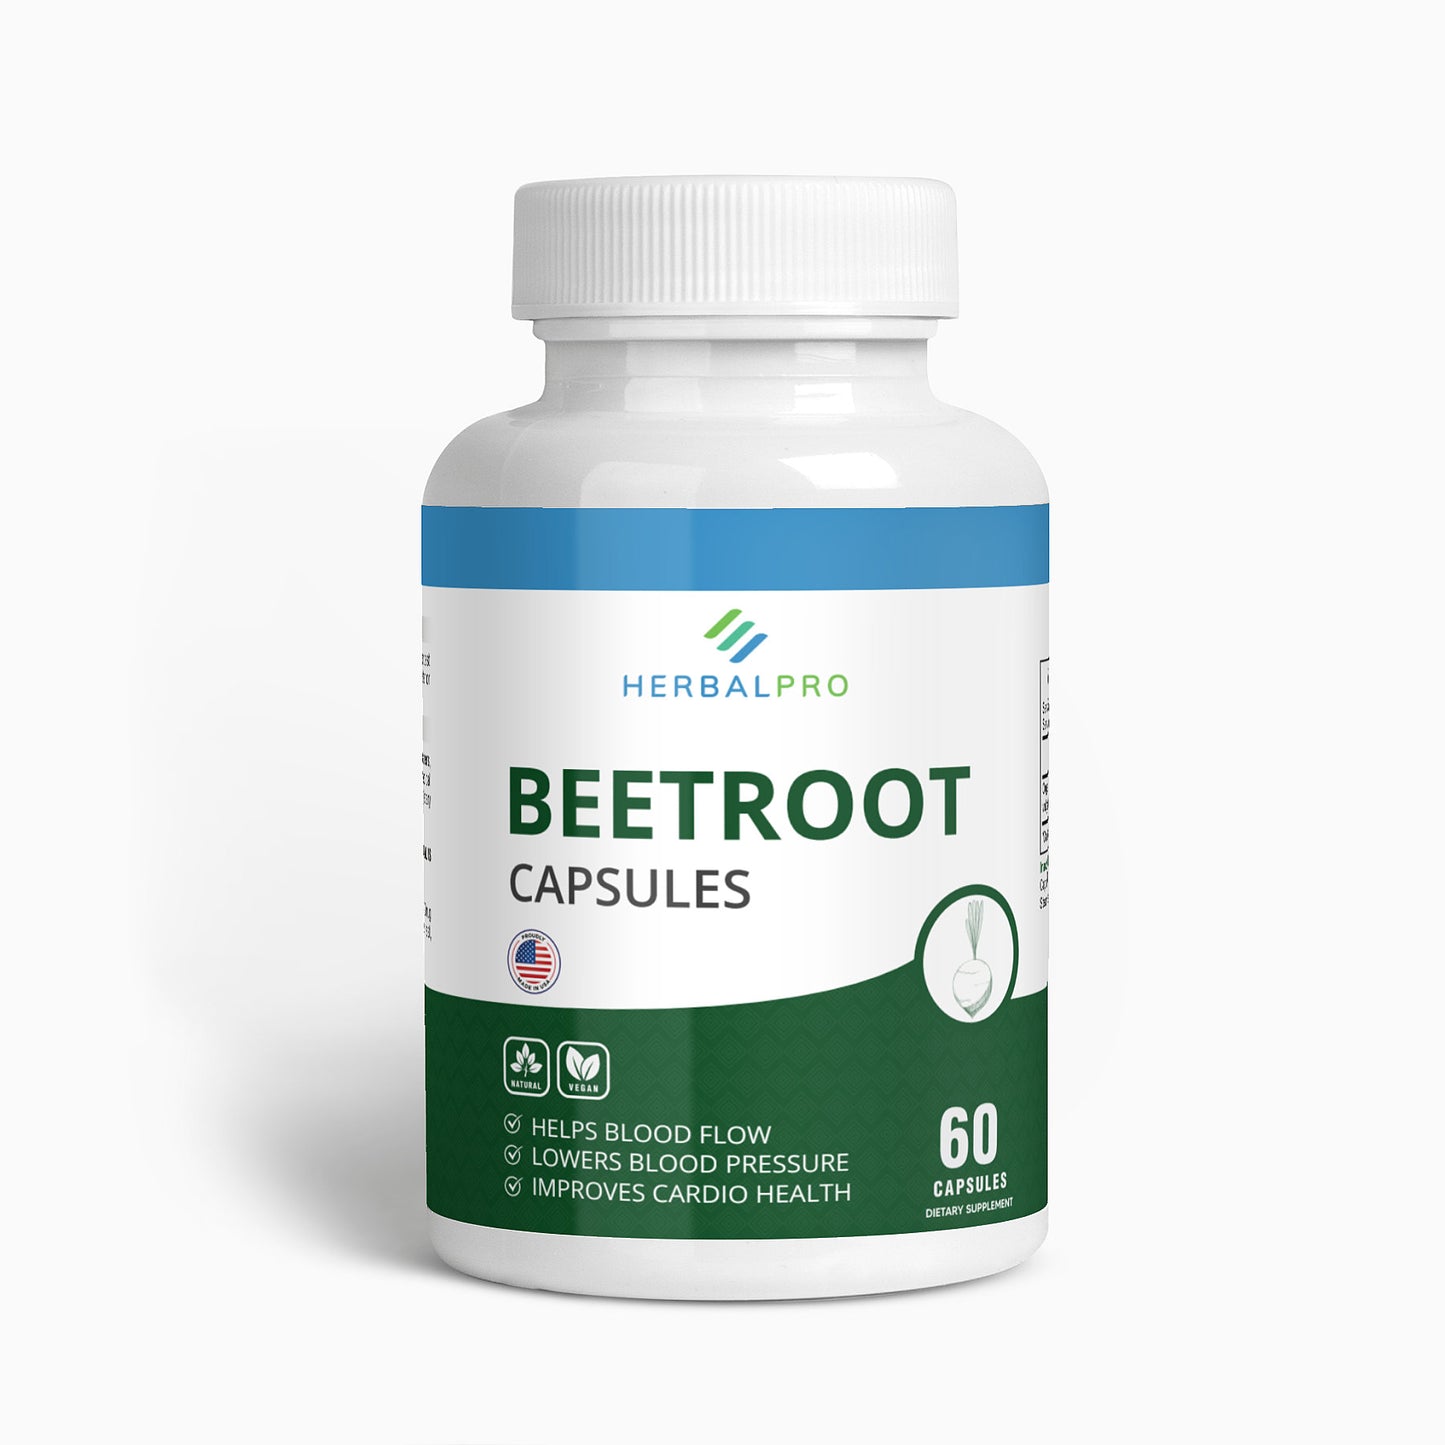 Beetroot (Capsules)